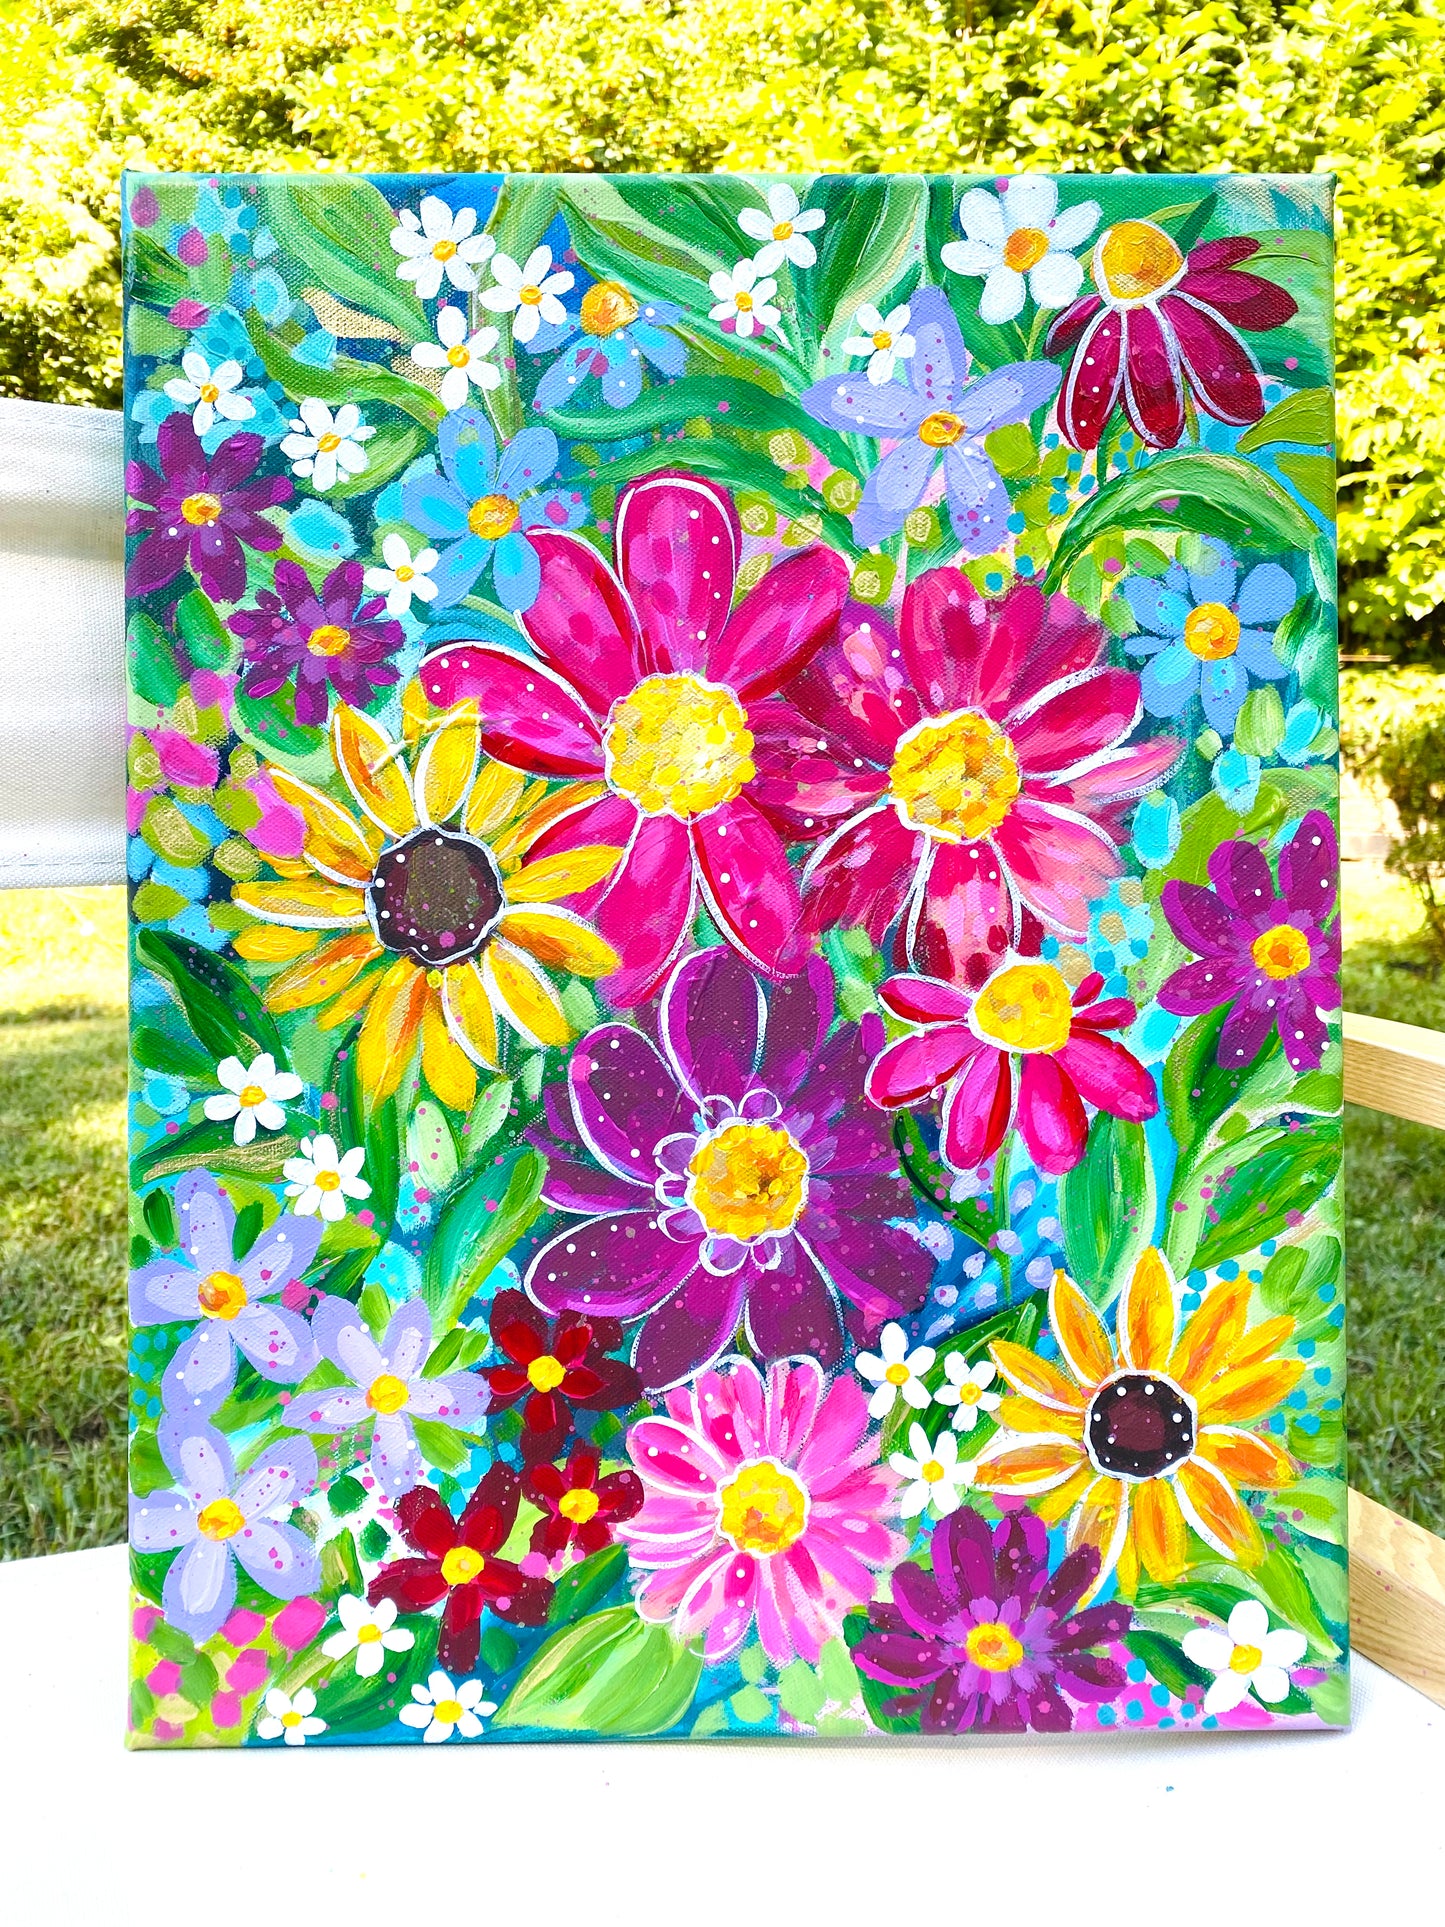 "Garden Rainbow" 14x18 inch original floral painting on canvas